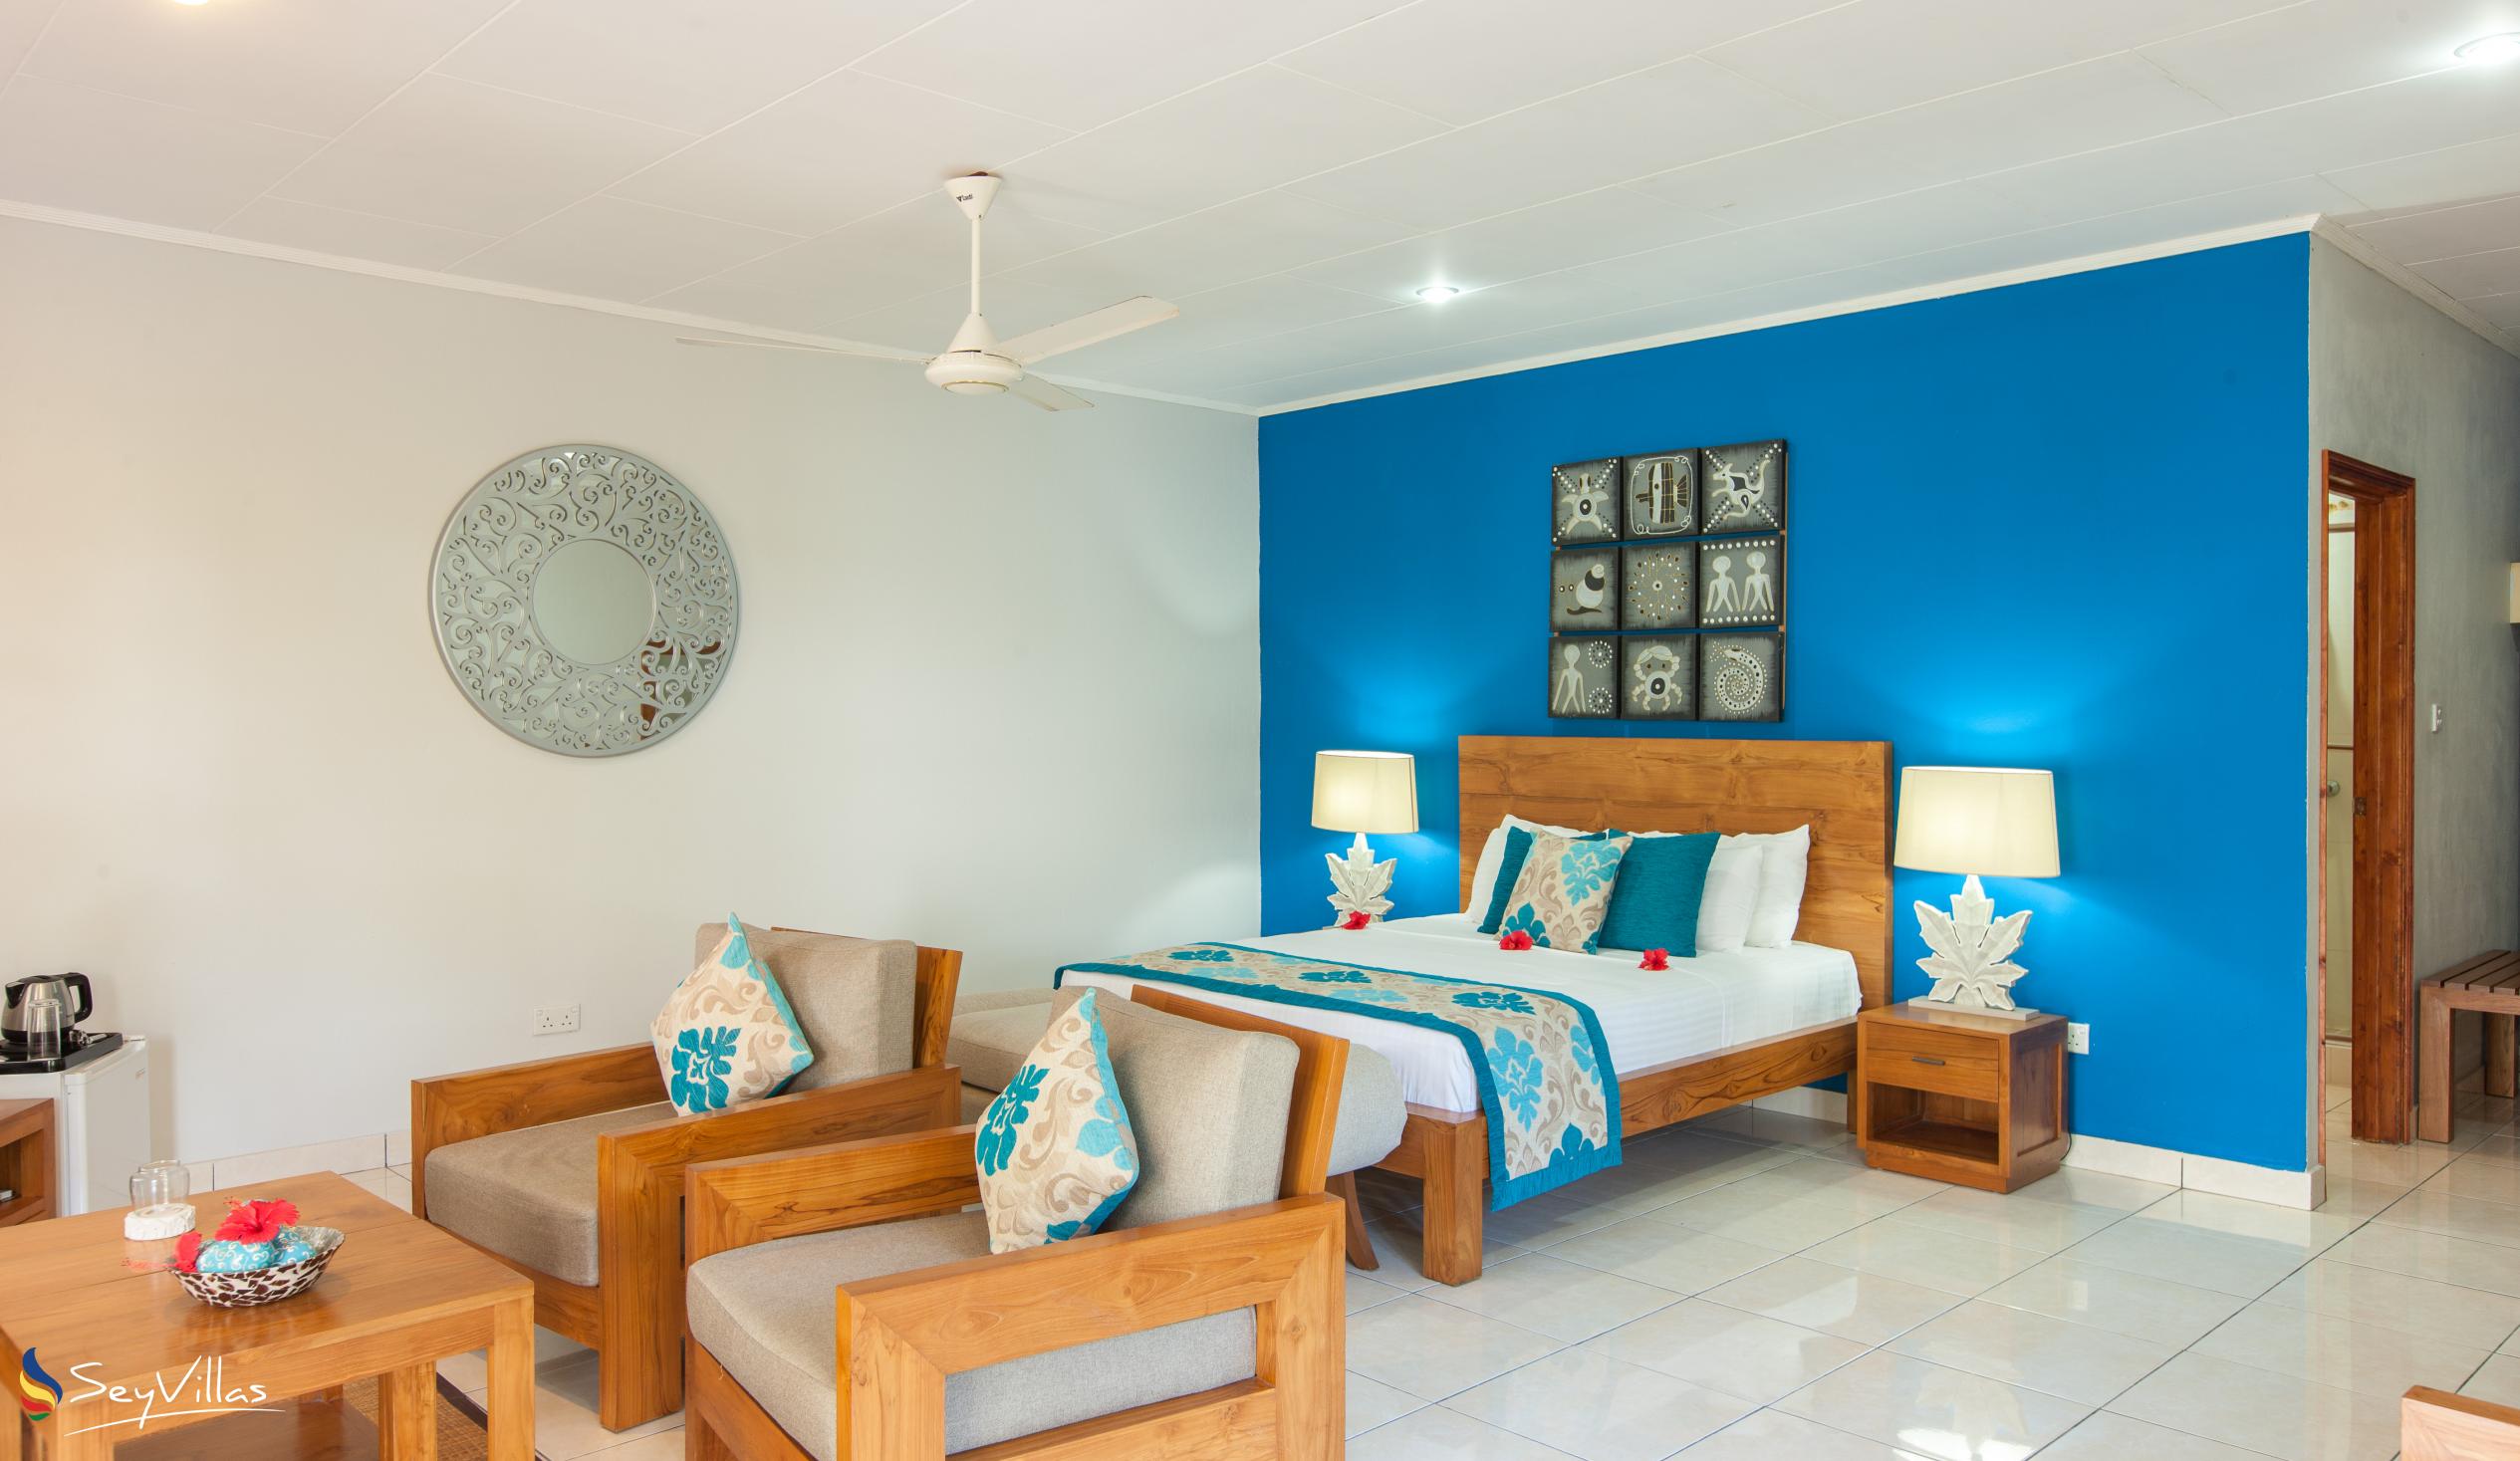 Foto 37: Villas de Mer - Junior Suite - Praslin (Seychellen)